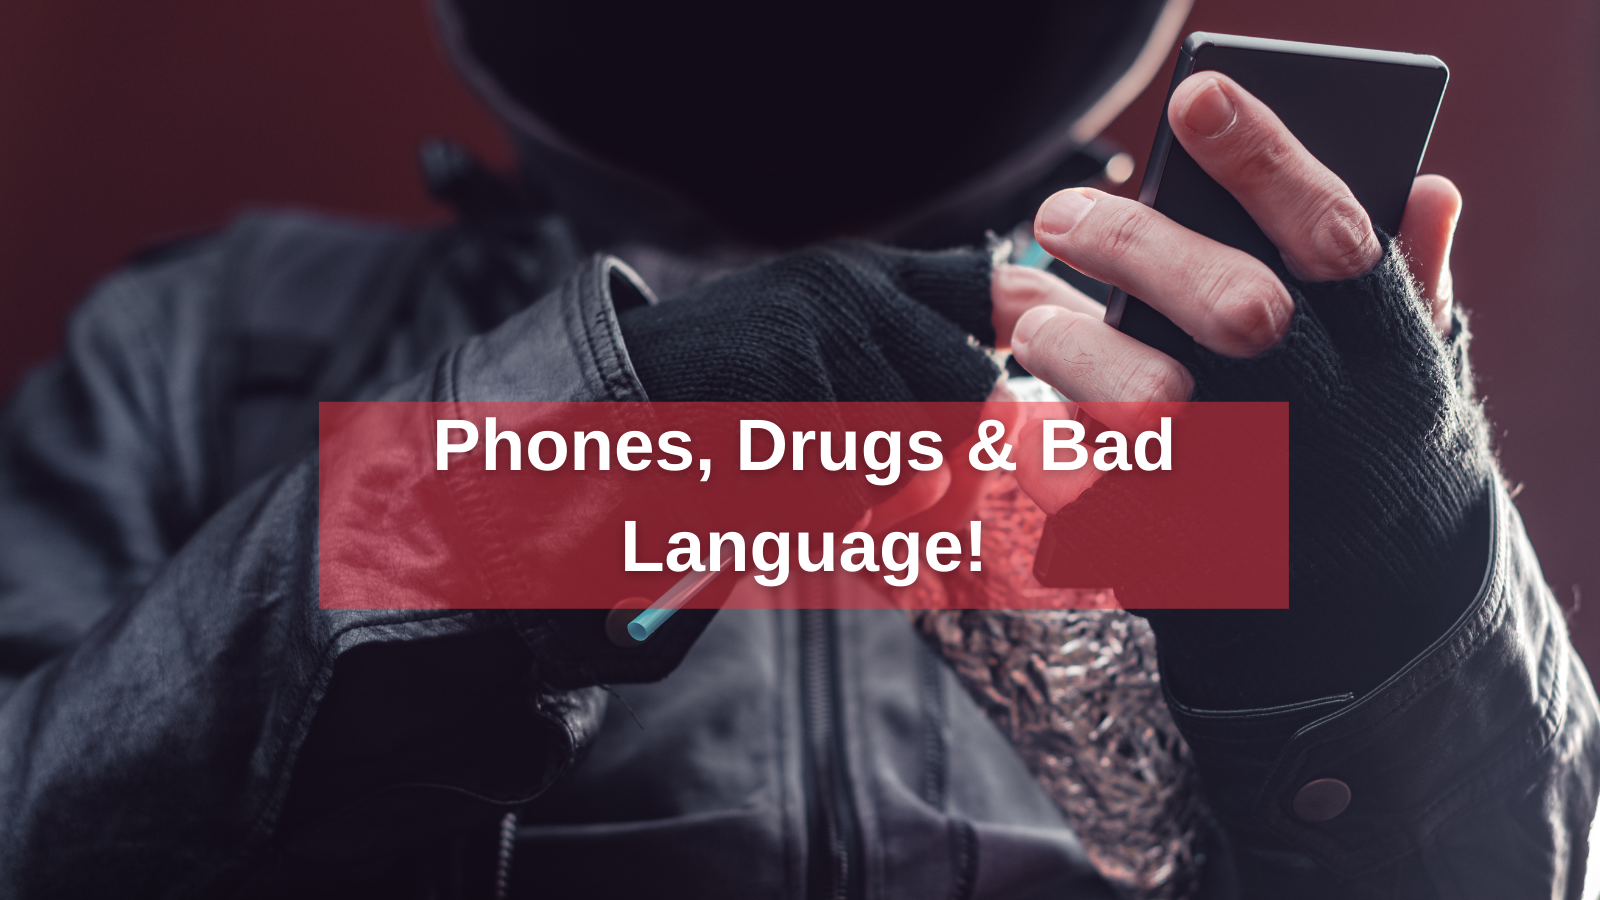 Phones, Drugs & Bad Language! (1)